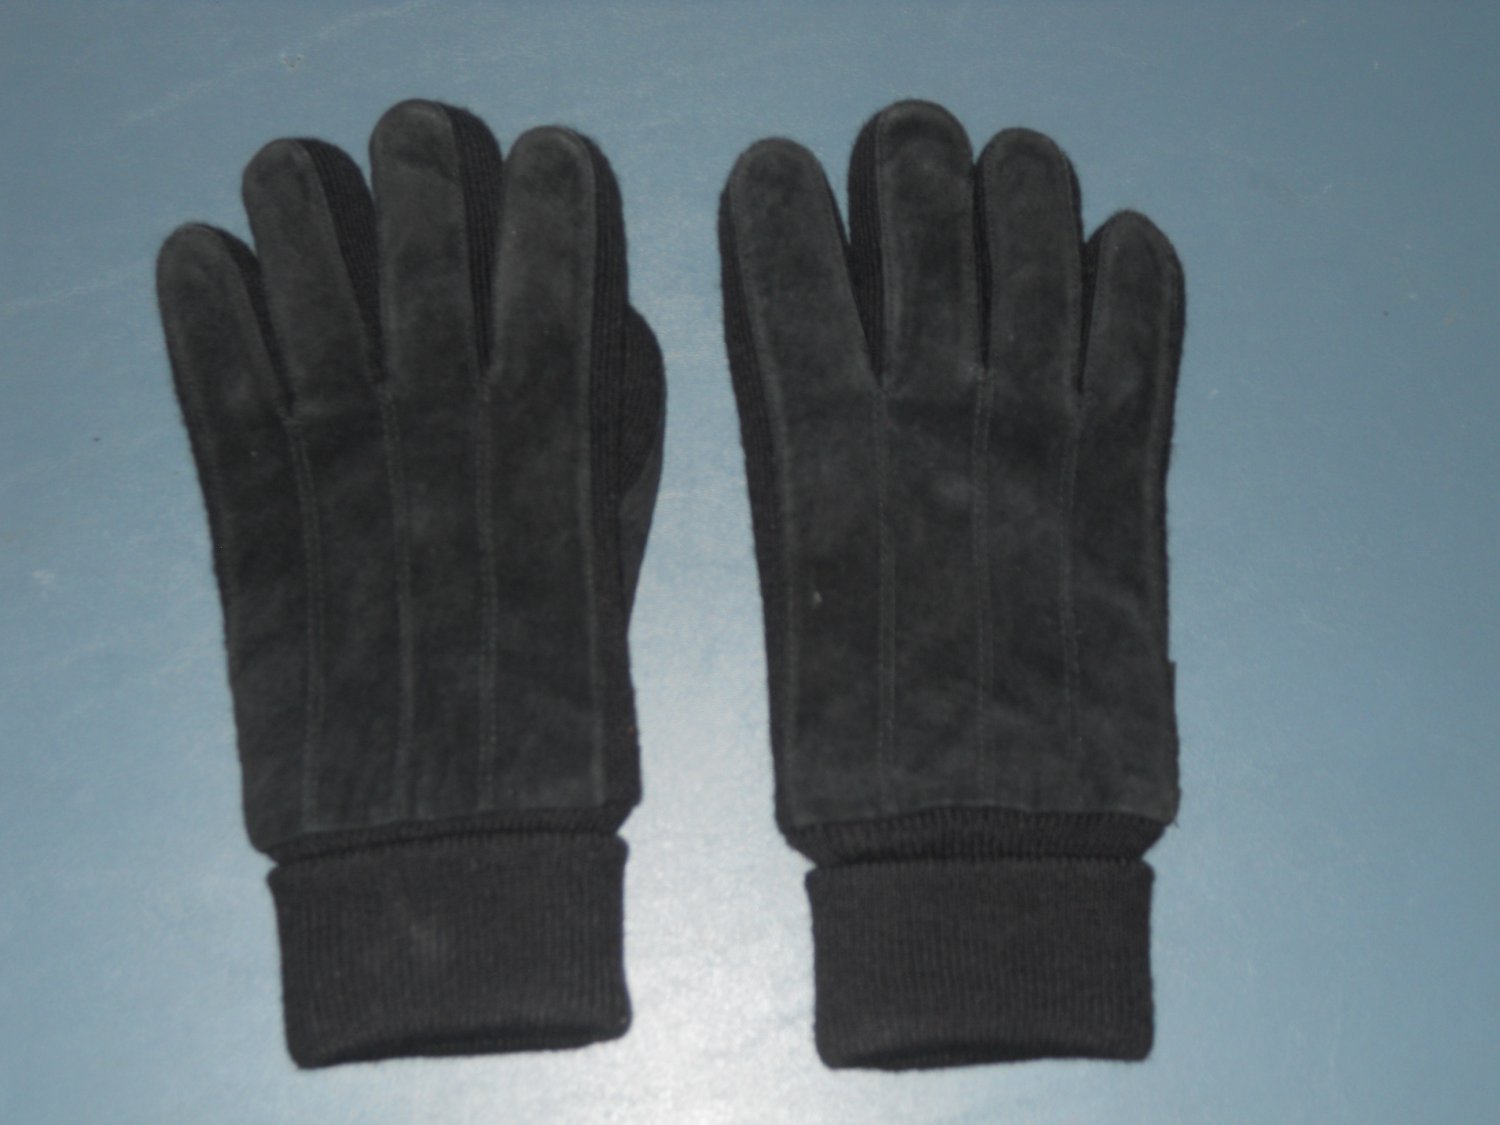  insulation 40 gram gloves Men's M/L leather